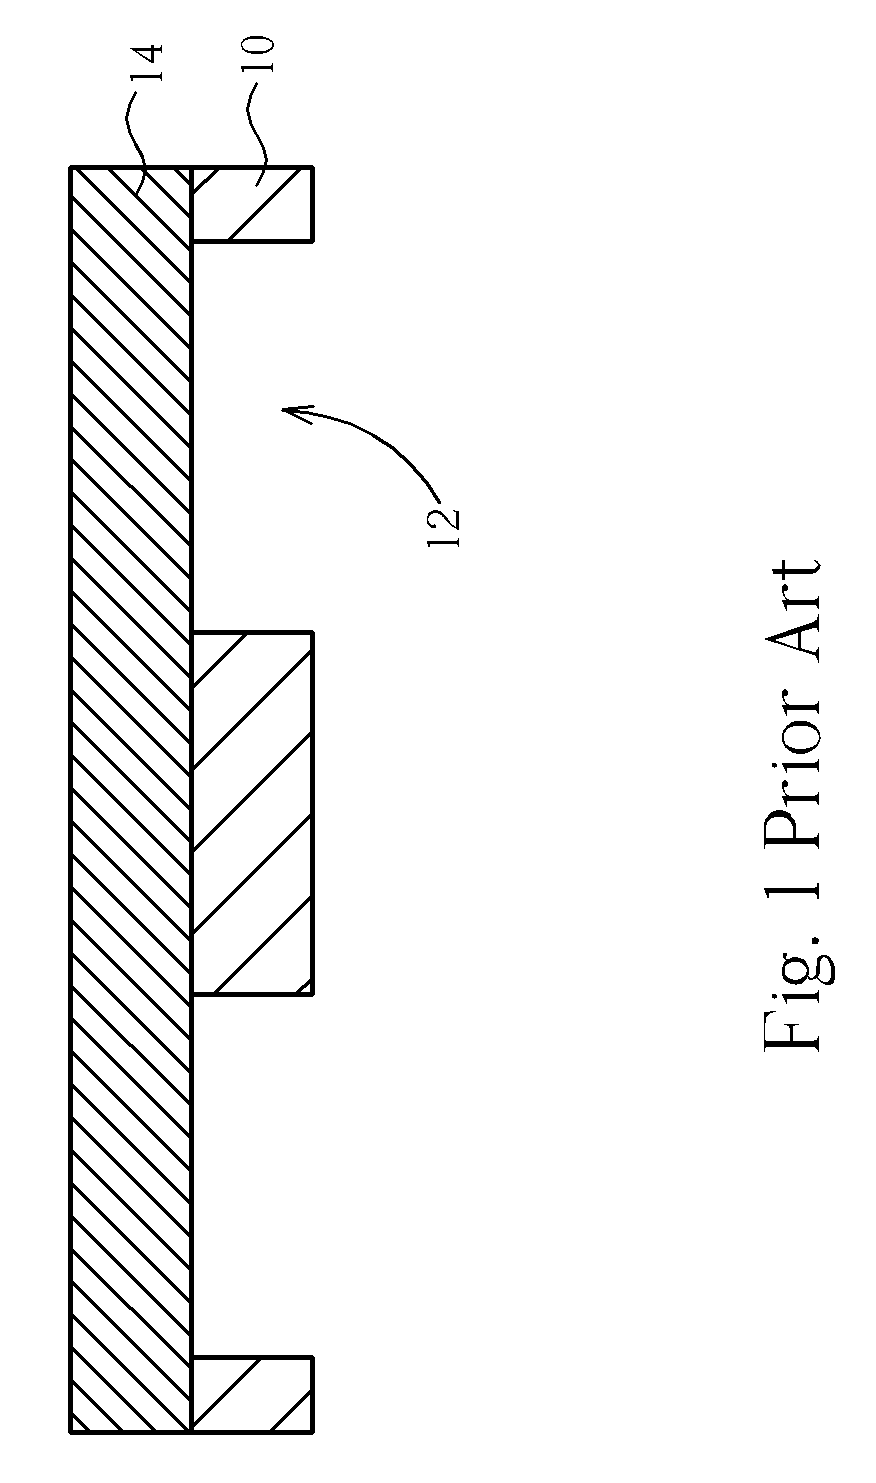 Method of fabricating optical device caps